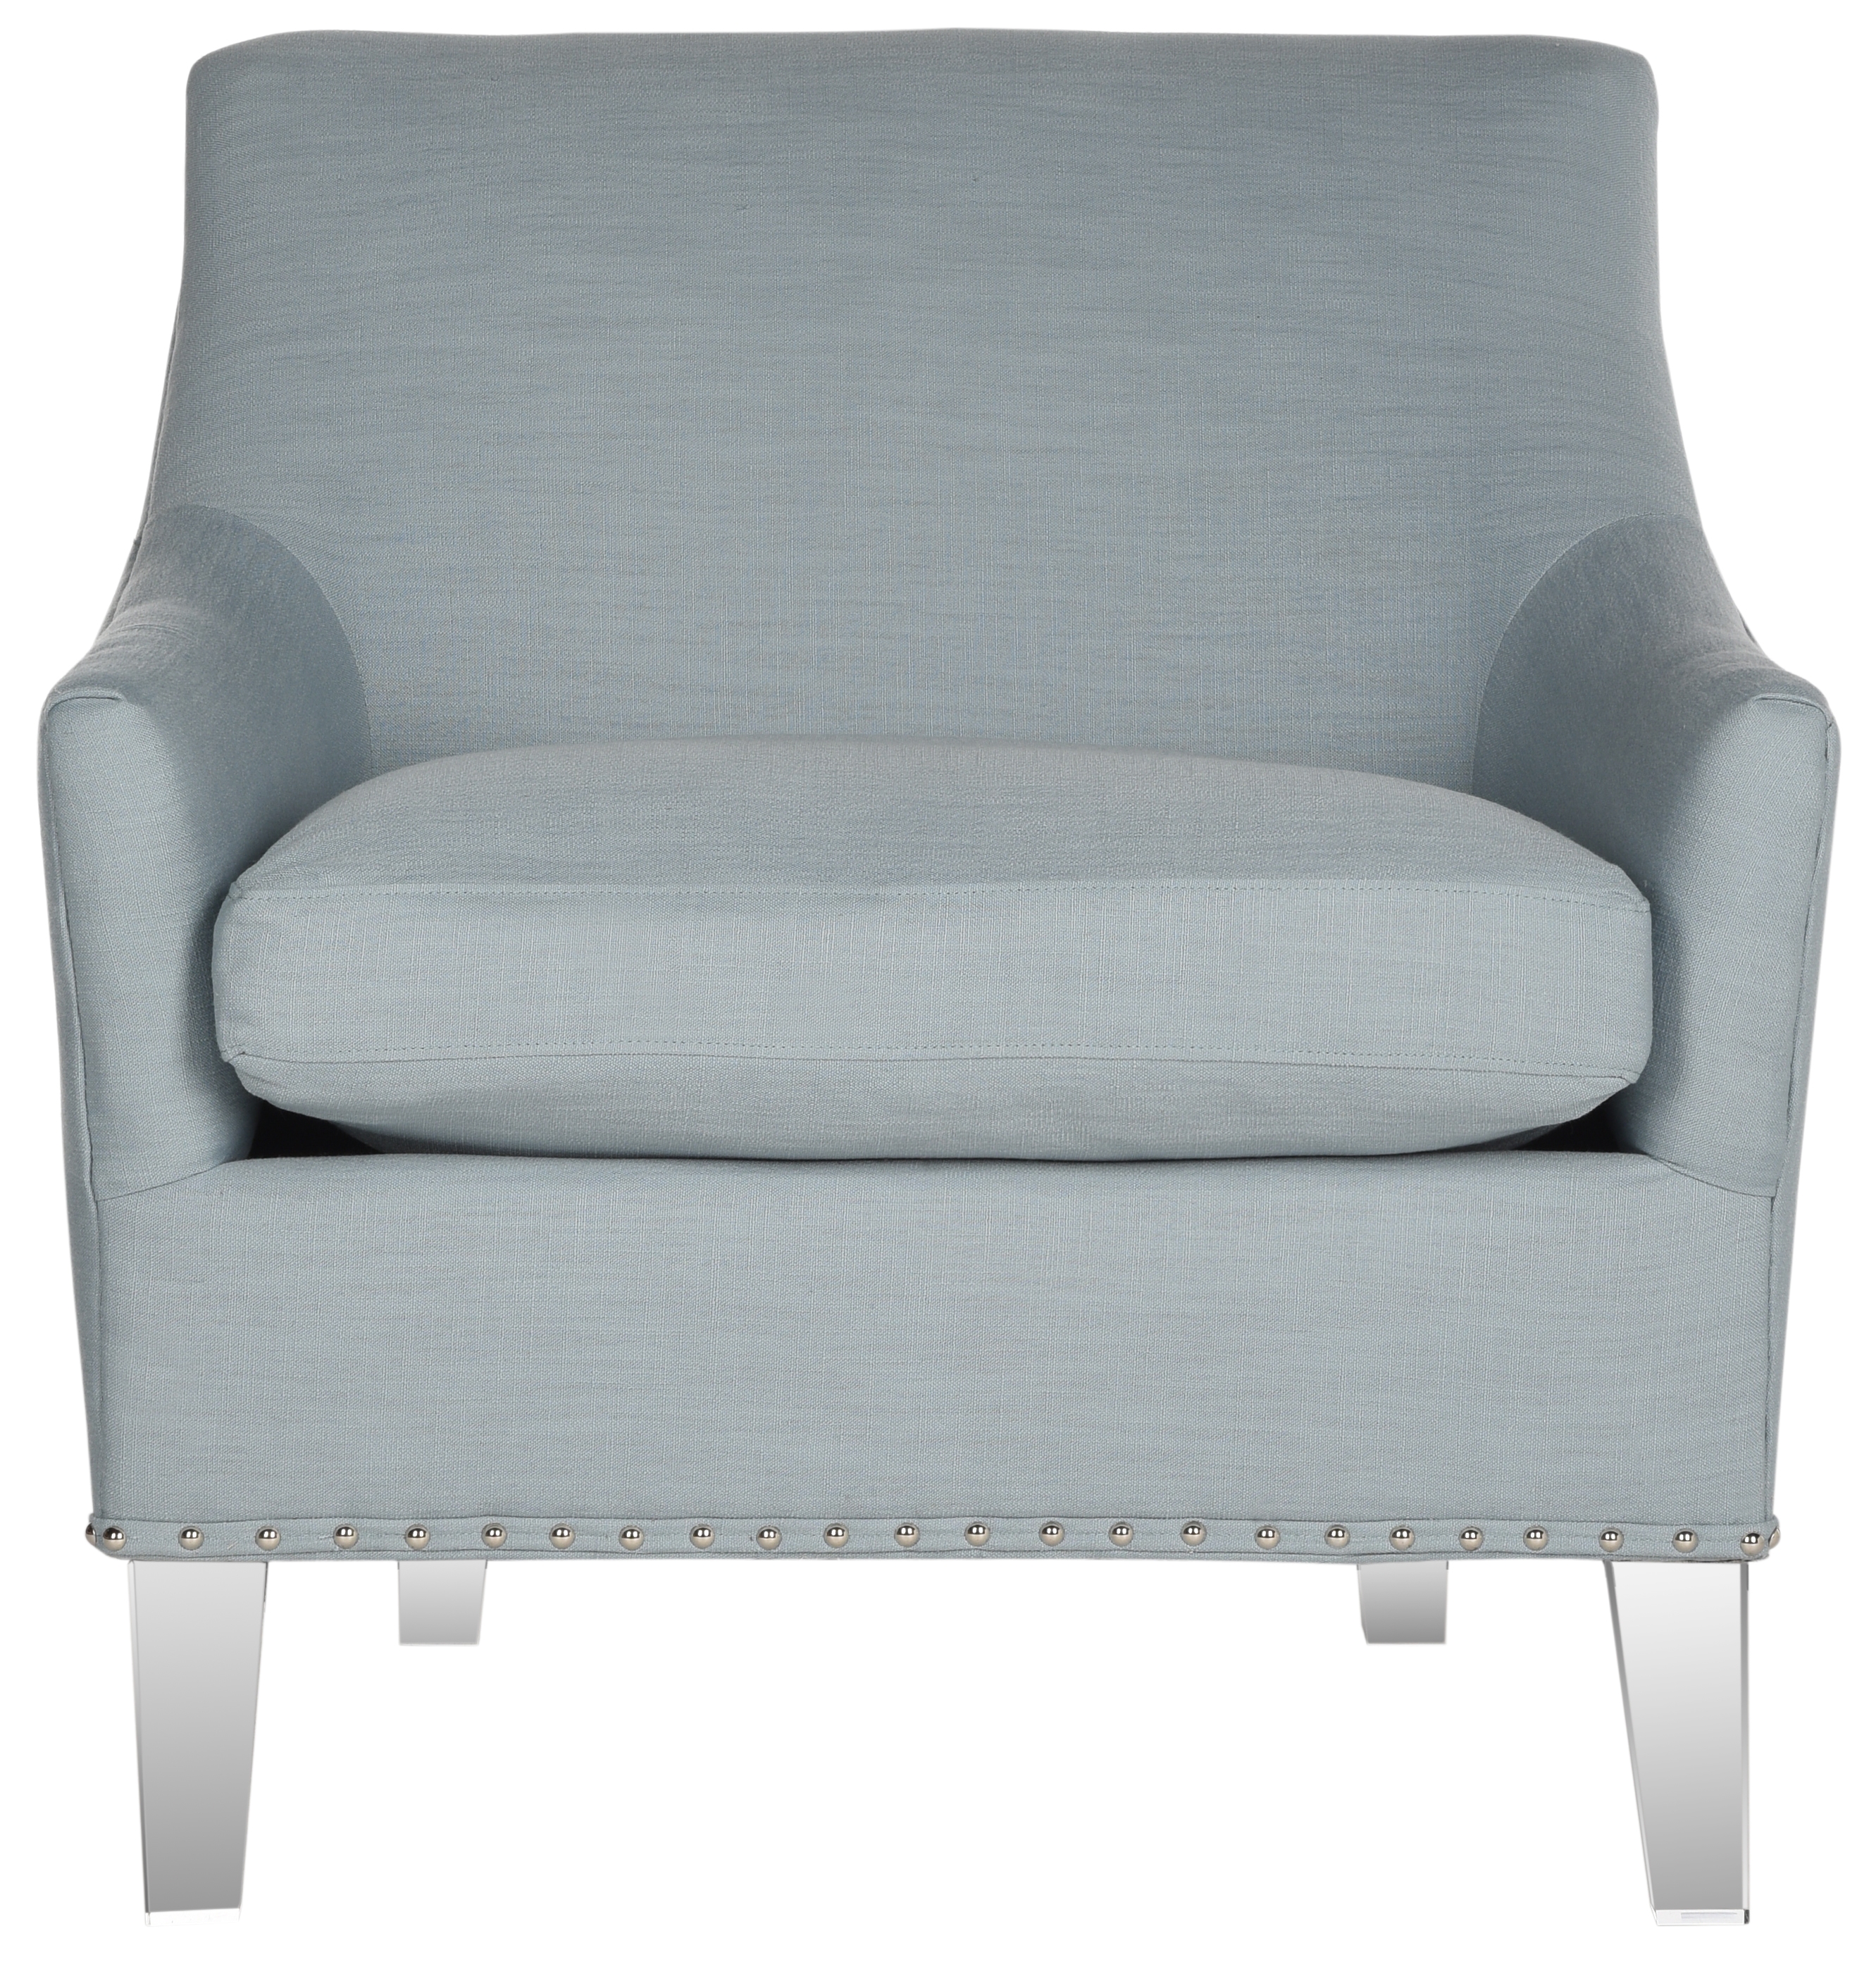 Hollywood Glam Acrylic Teal Club Chair - Teal/Clear - Arlo Home - Image 0